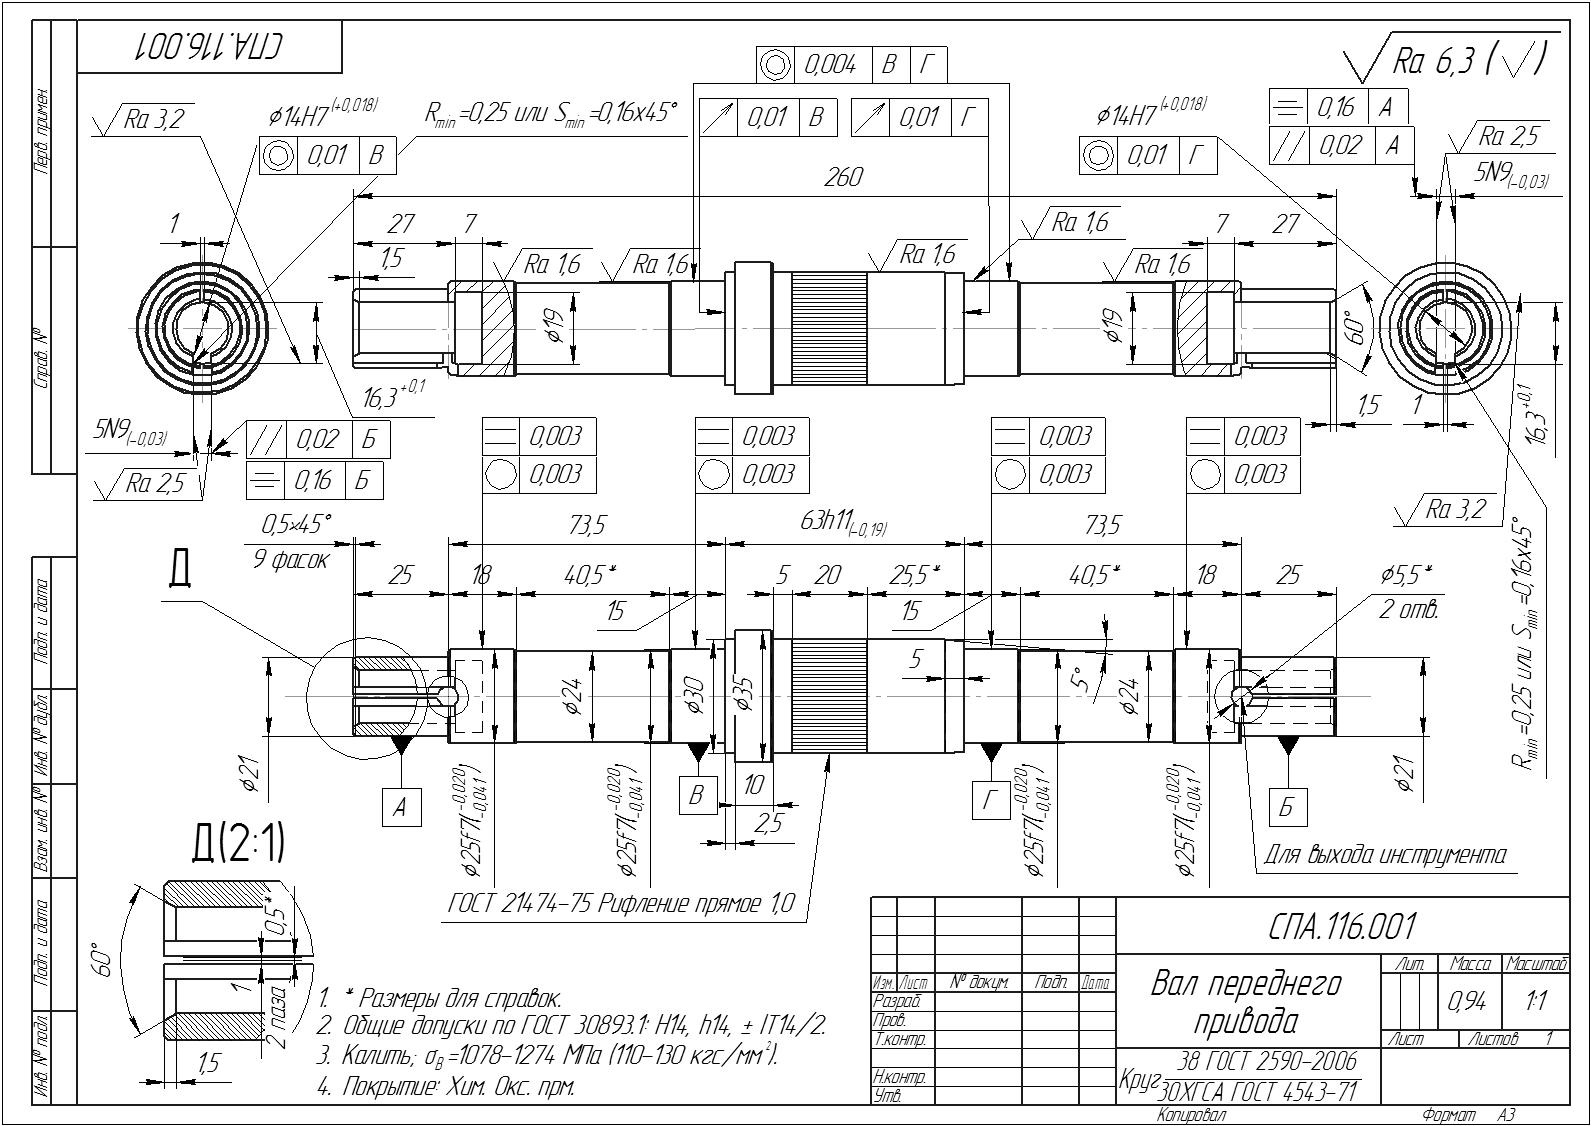 СПА.116.001 - Вал переднего привода Инженер Самута П А.jpg